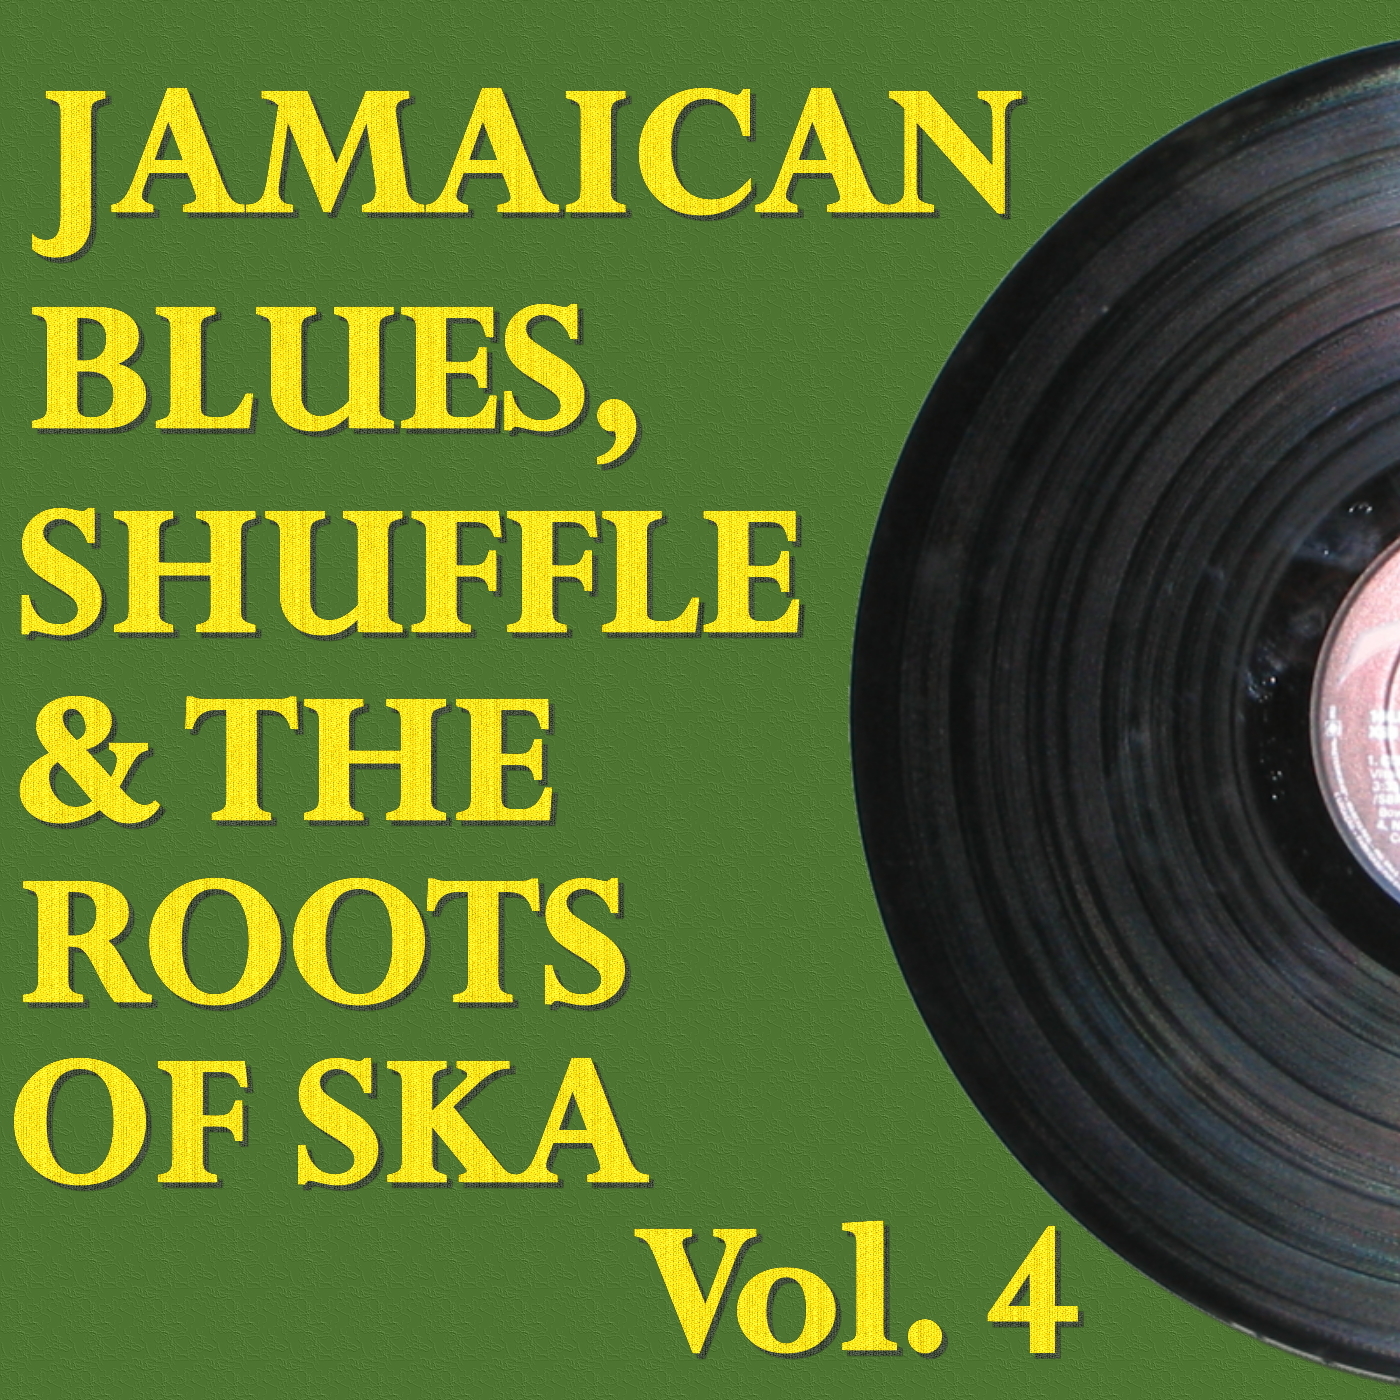 Jamaican Blues, Shuffle & the Roots of Ska, Vol. 4